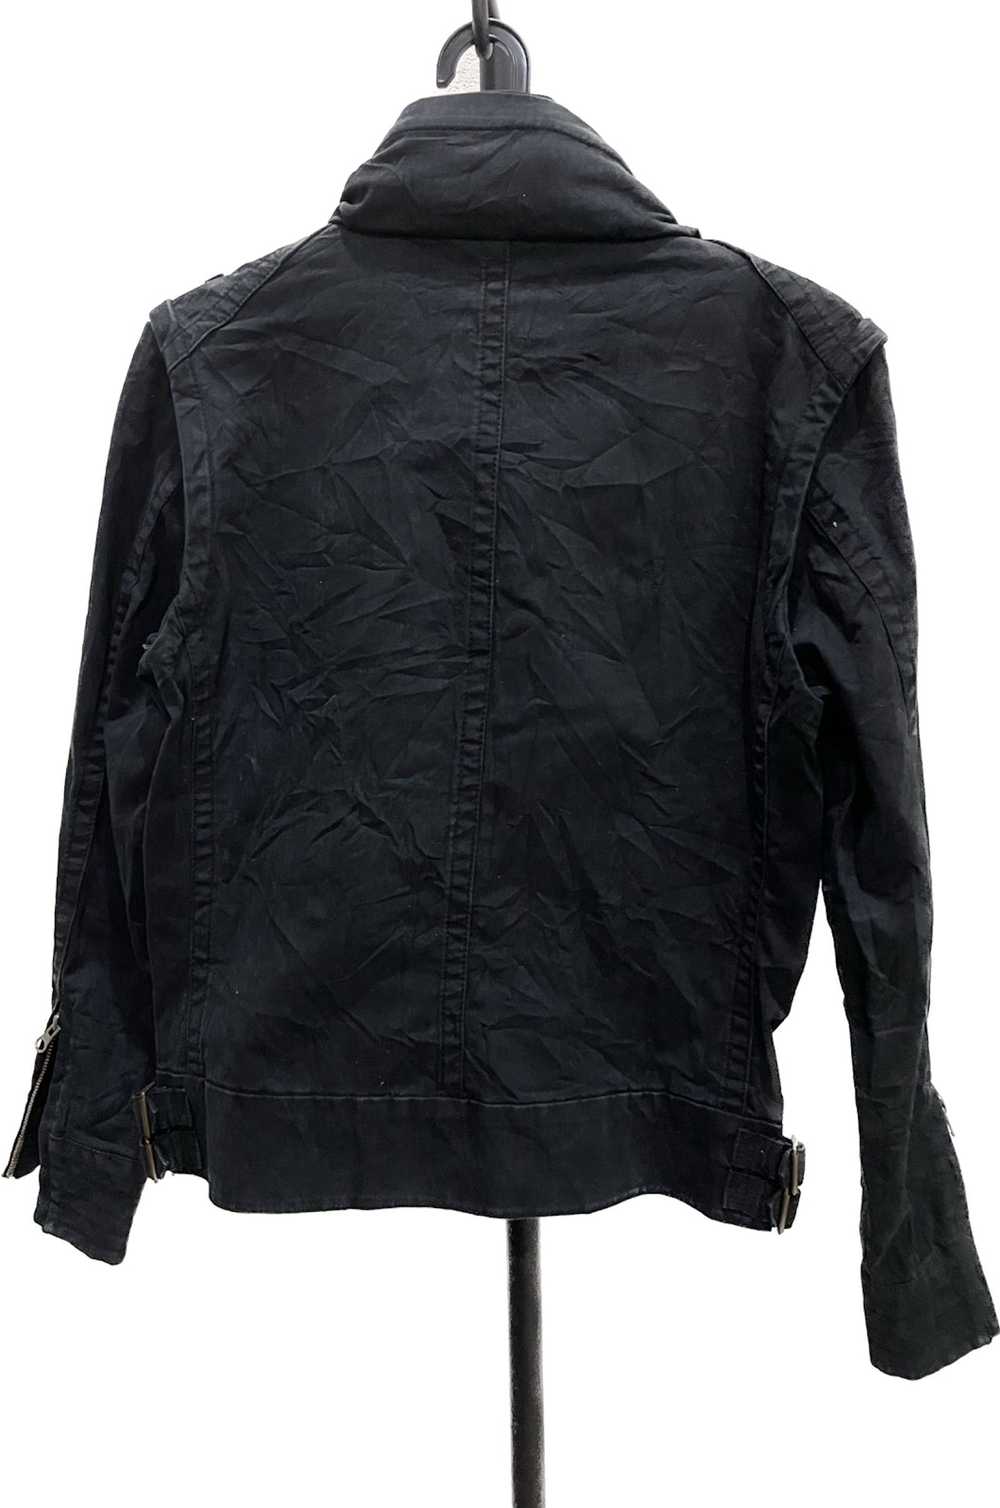 PPFM Rare🤘 PPFM Jacket Removable Sleeves - image 6